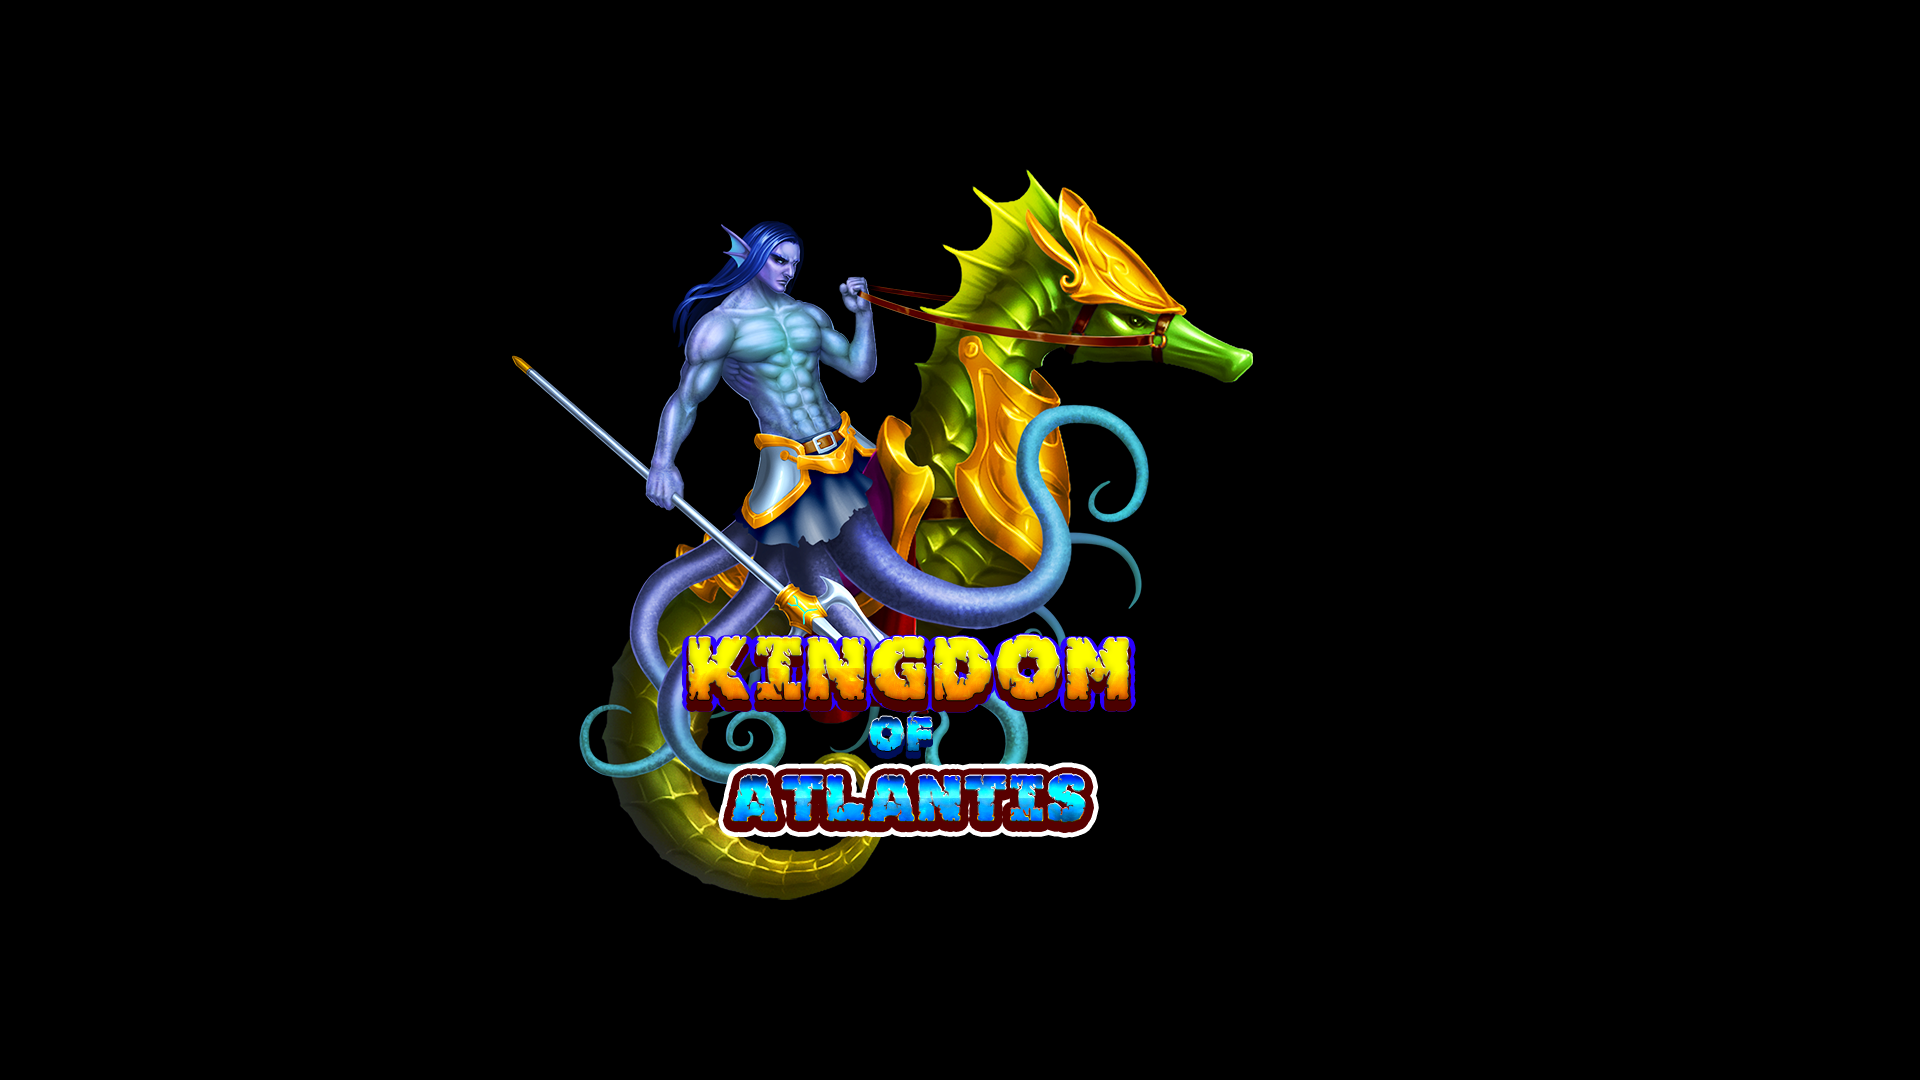 Kingdom of Atlantis - Fish Games